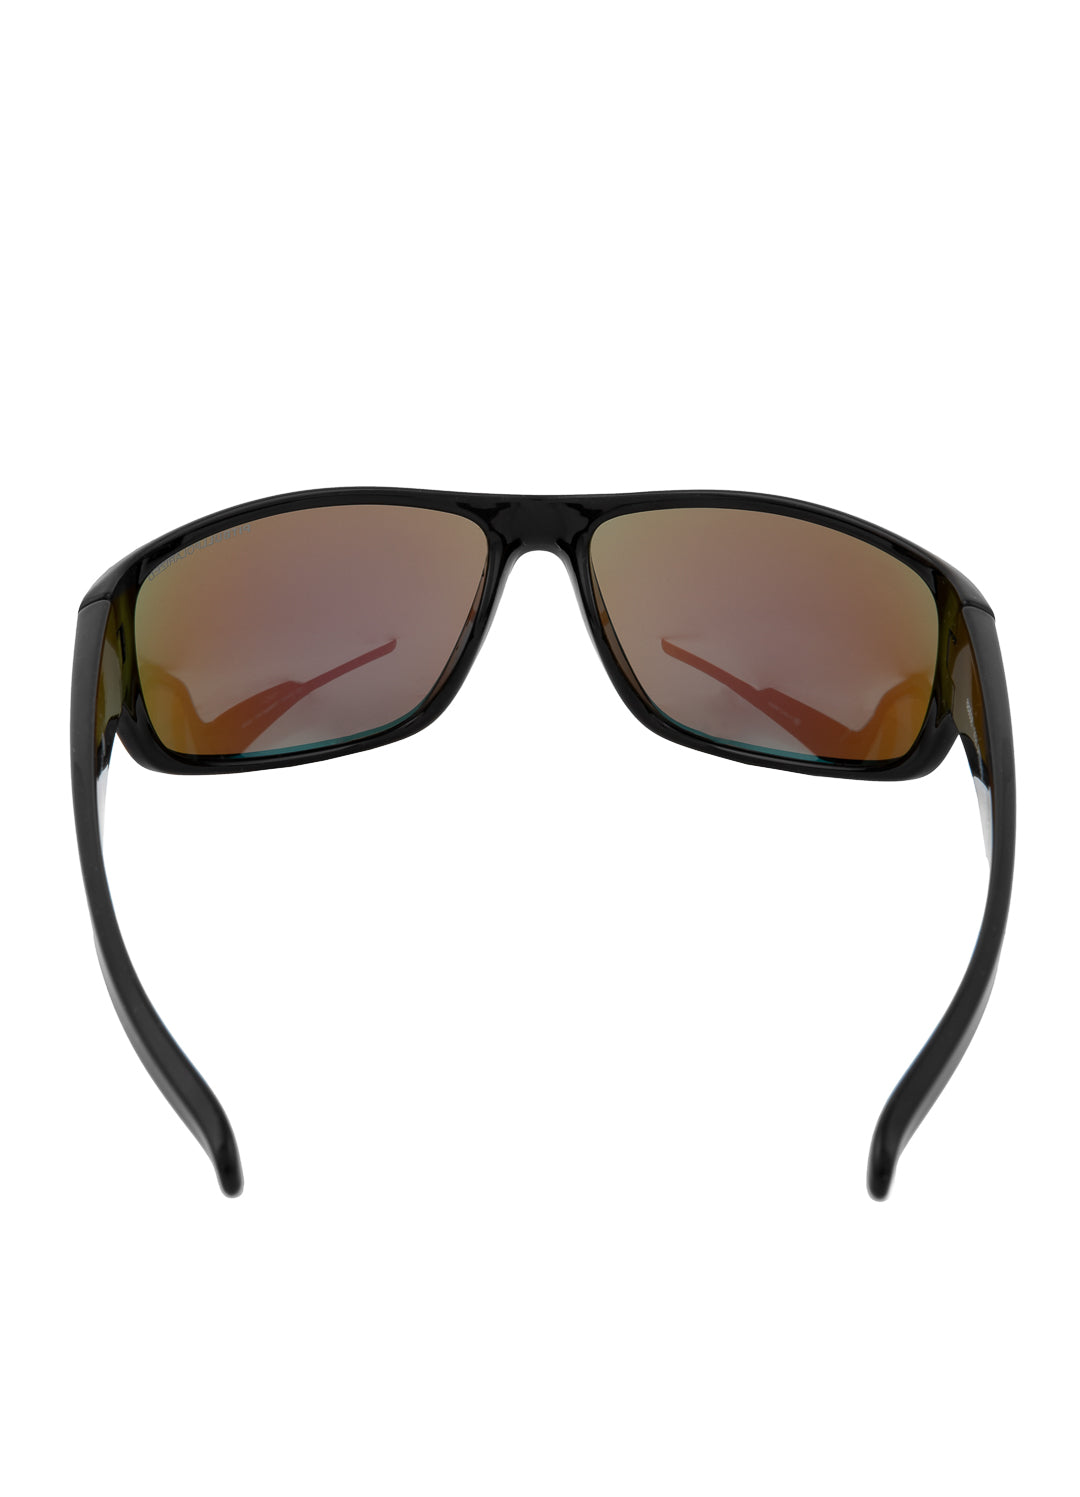 PEPPER Black/Blue Sunglasses.